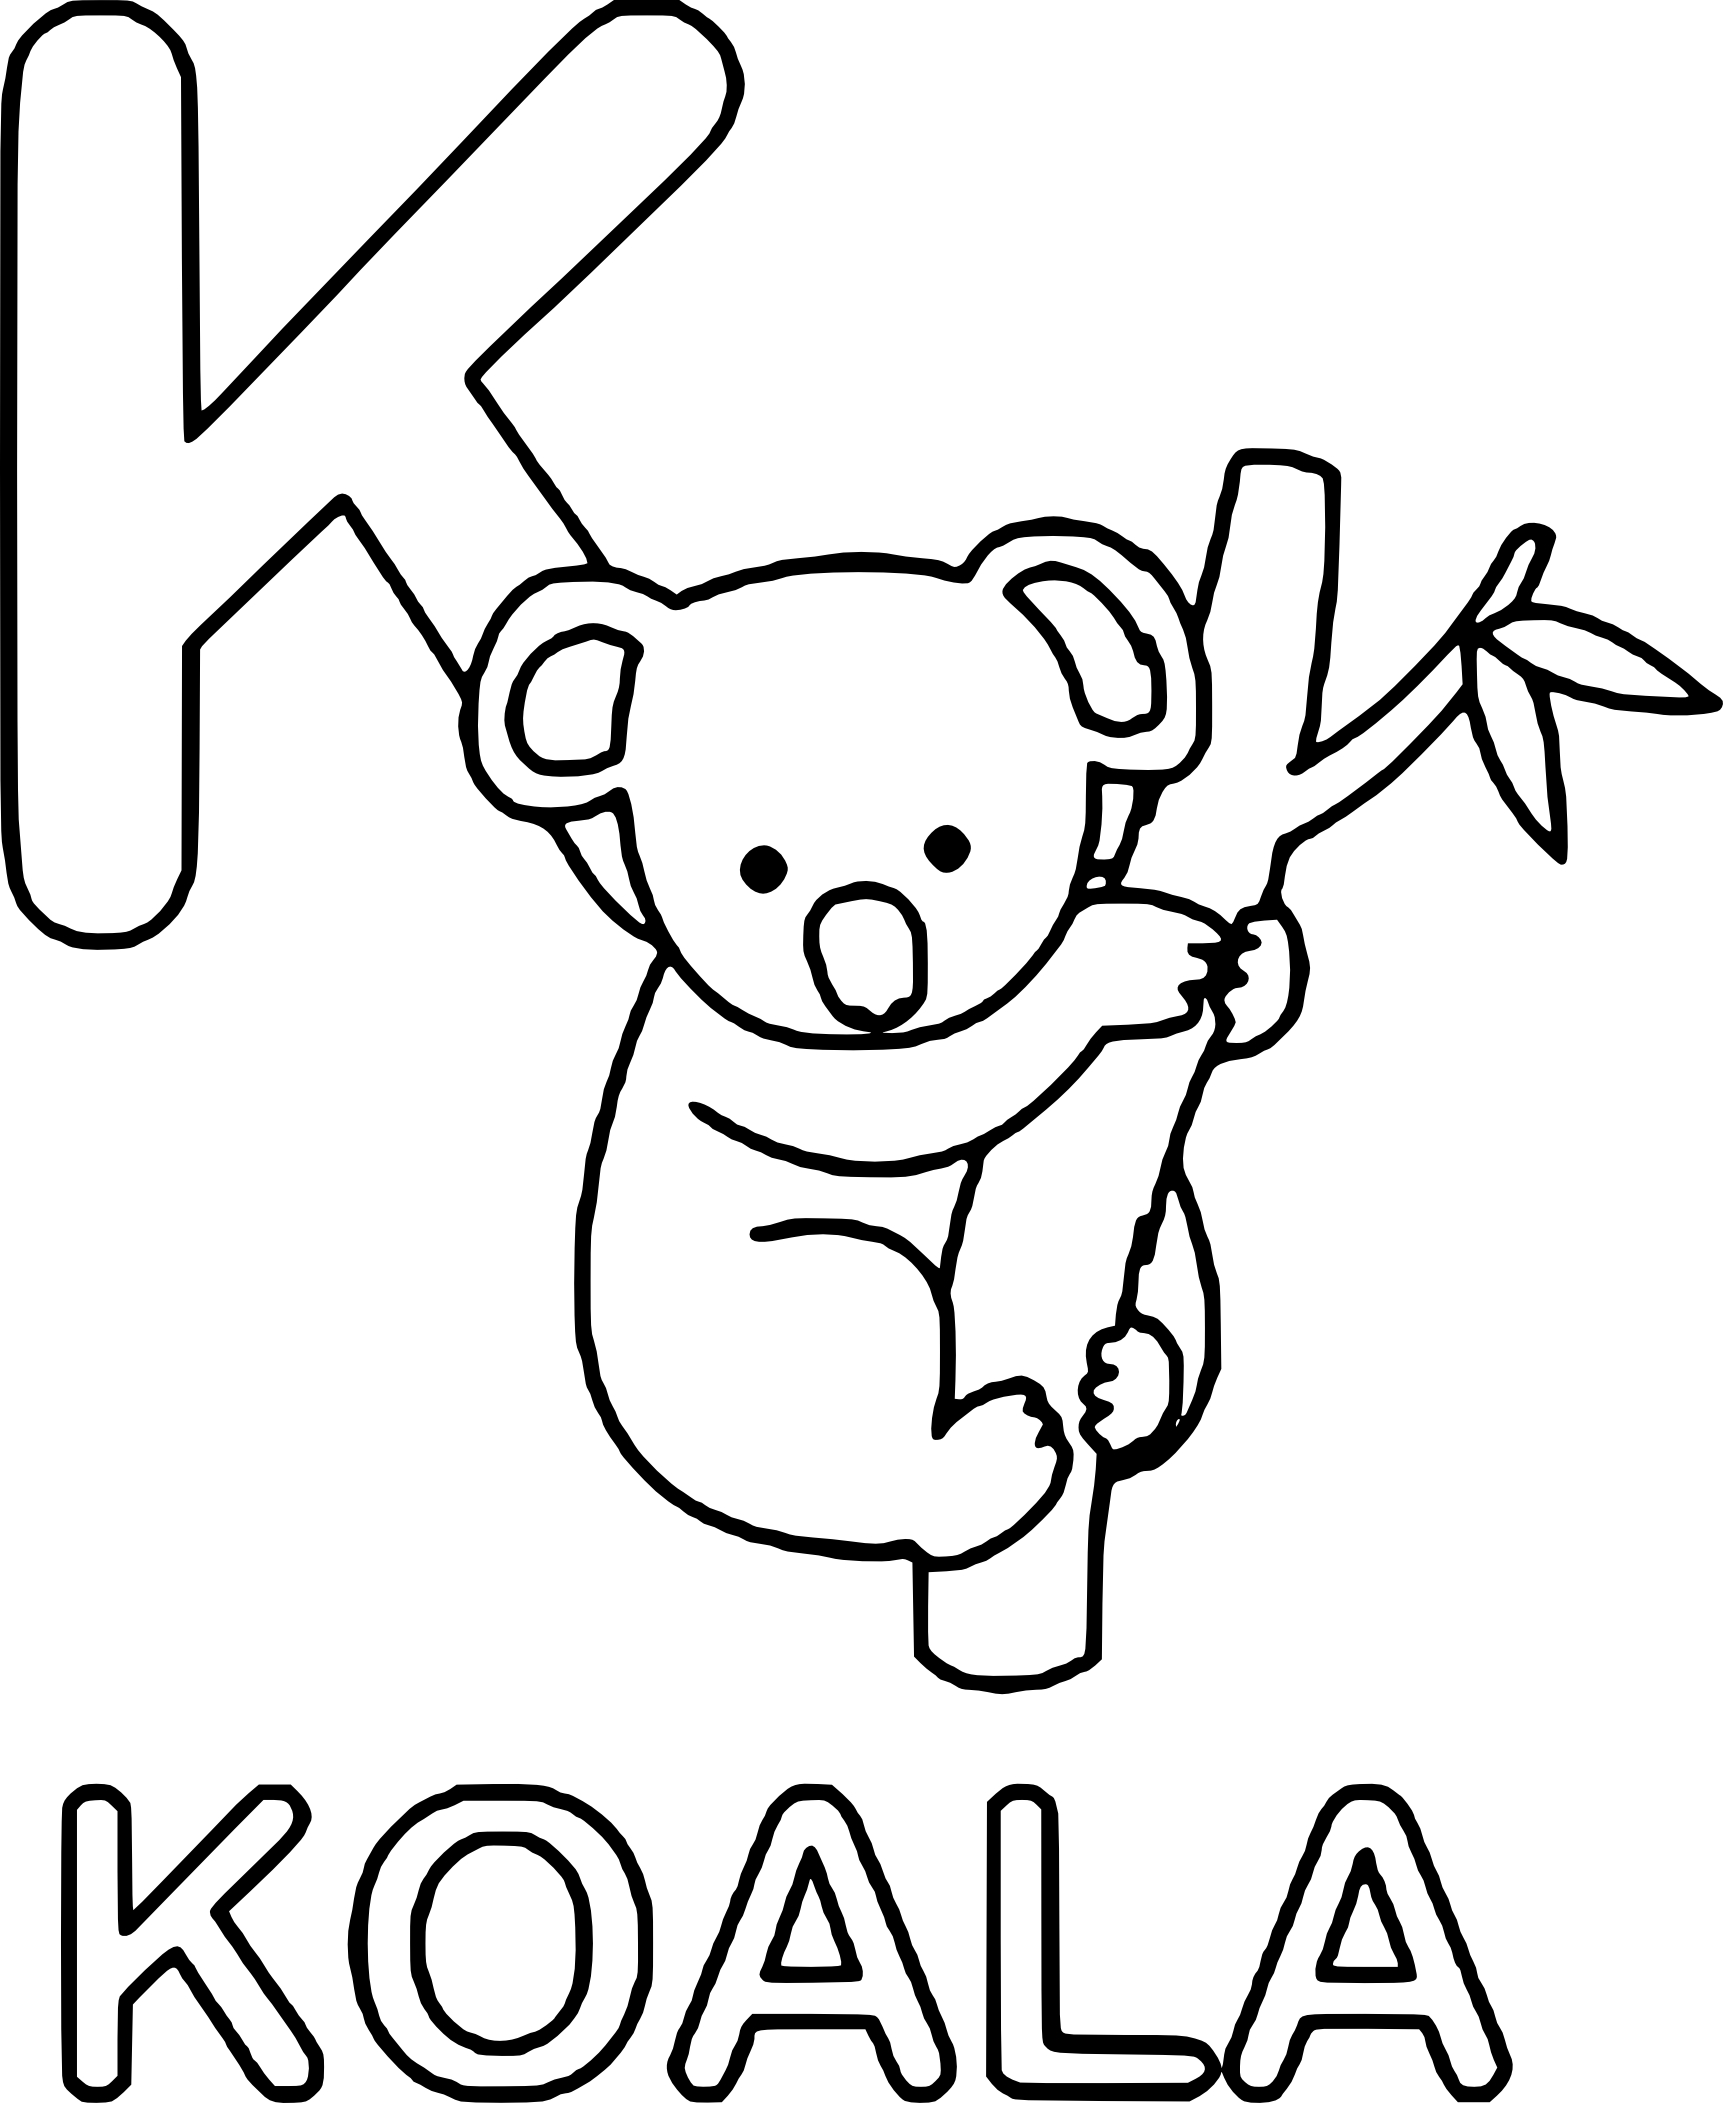 Cute Koala Coloring Pages at GetColorings.com   Free printable ...